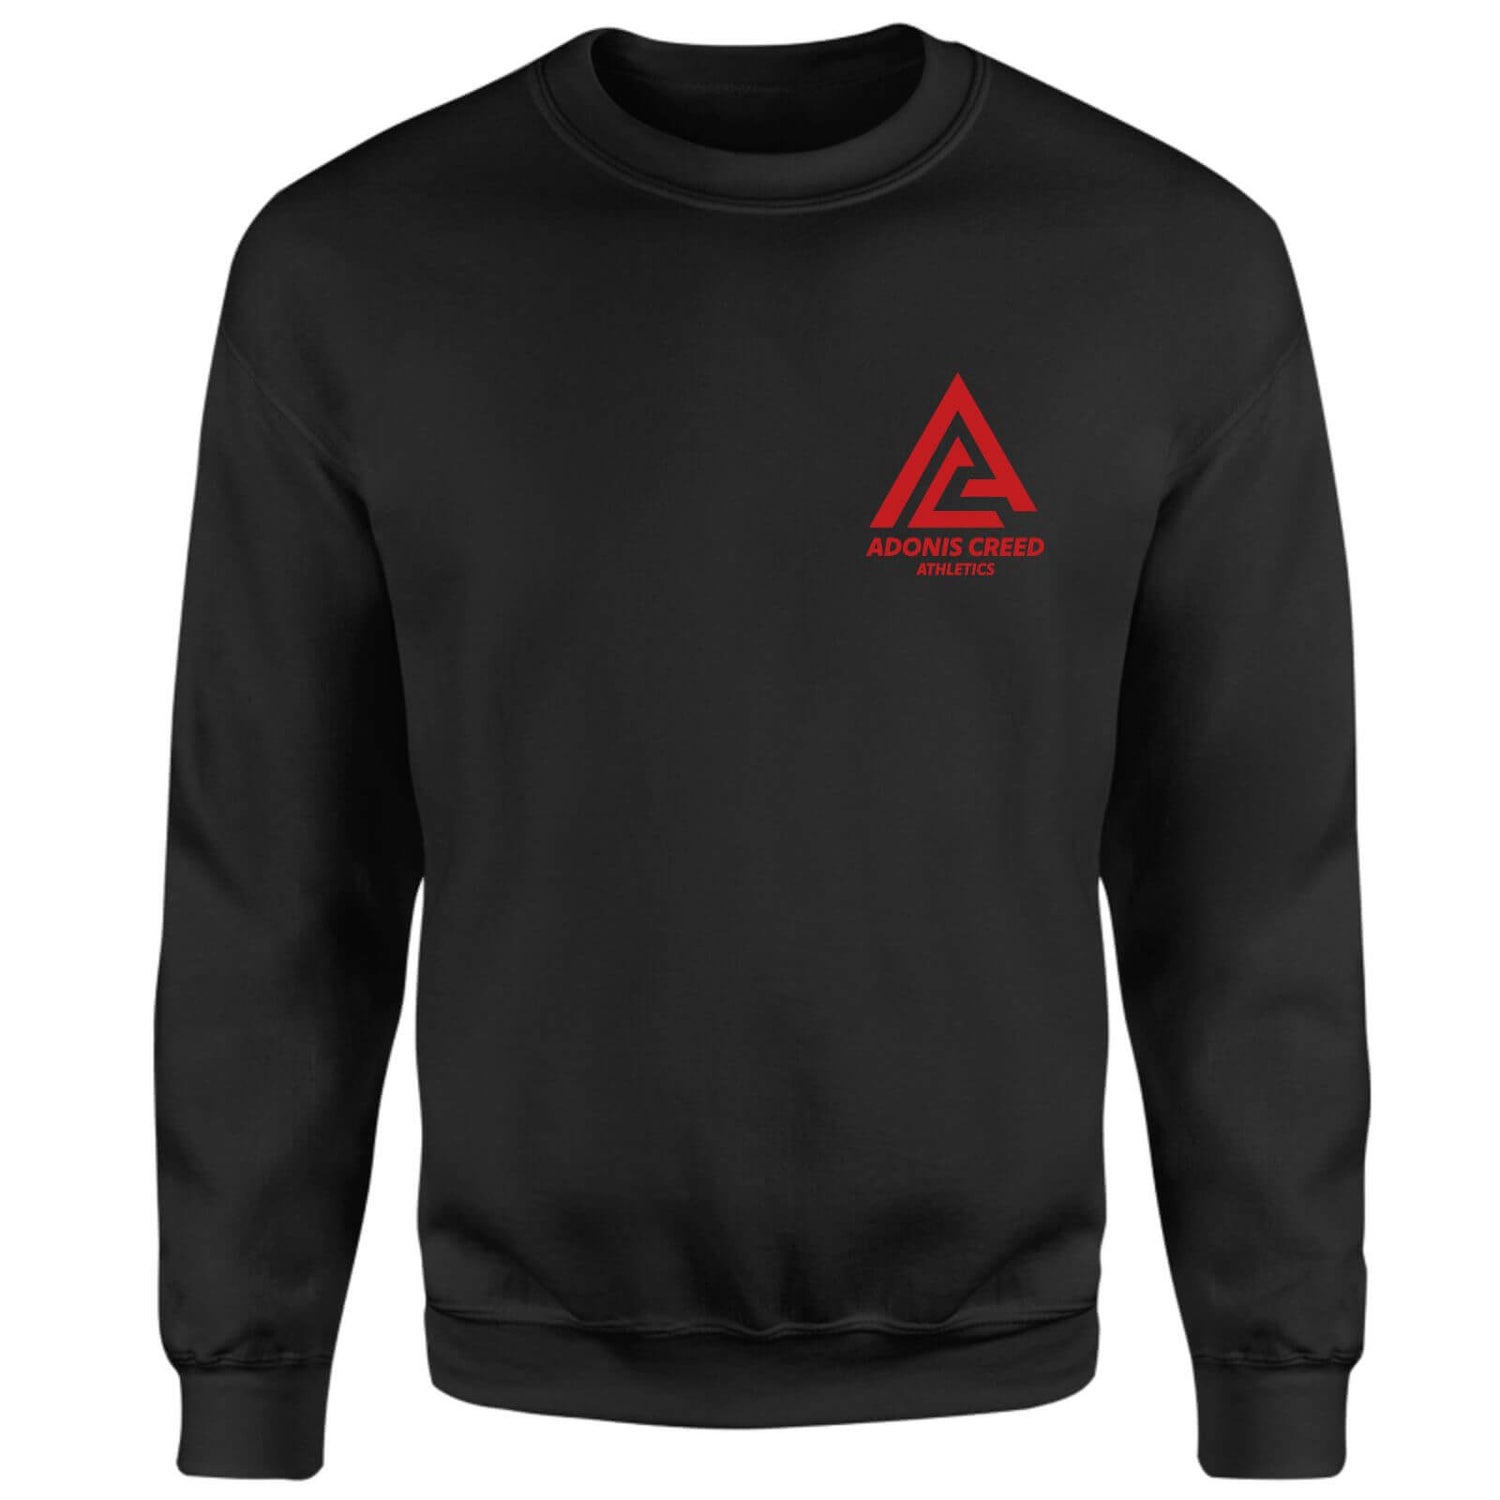 Creed Adonis Creed Athletics Logo Sweatshirt - Black